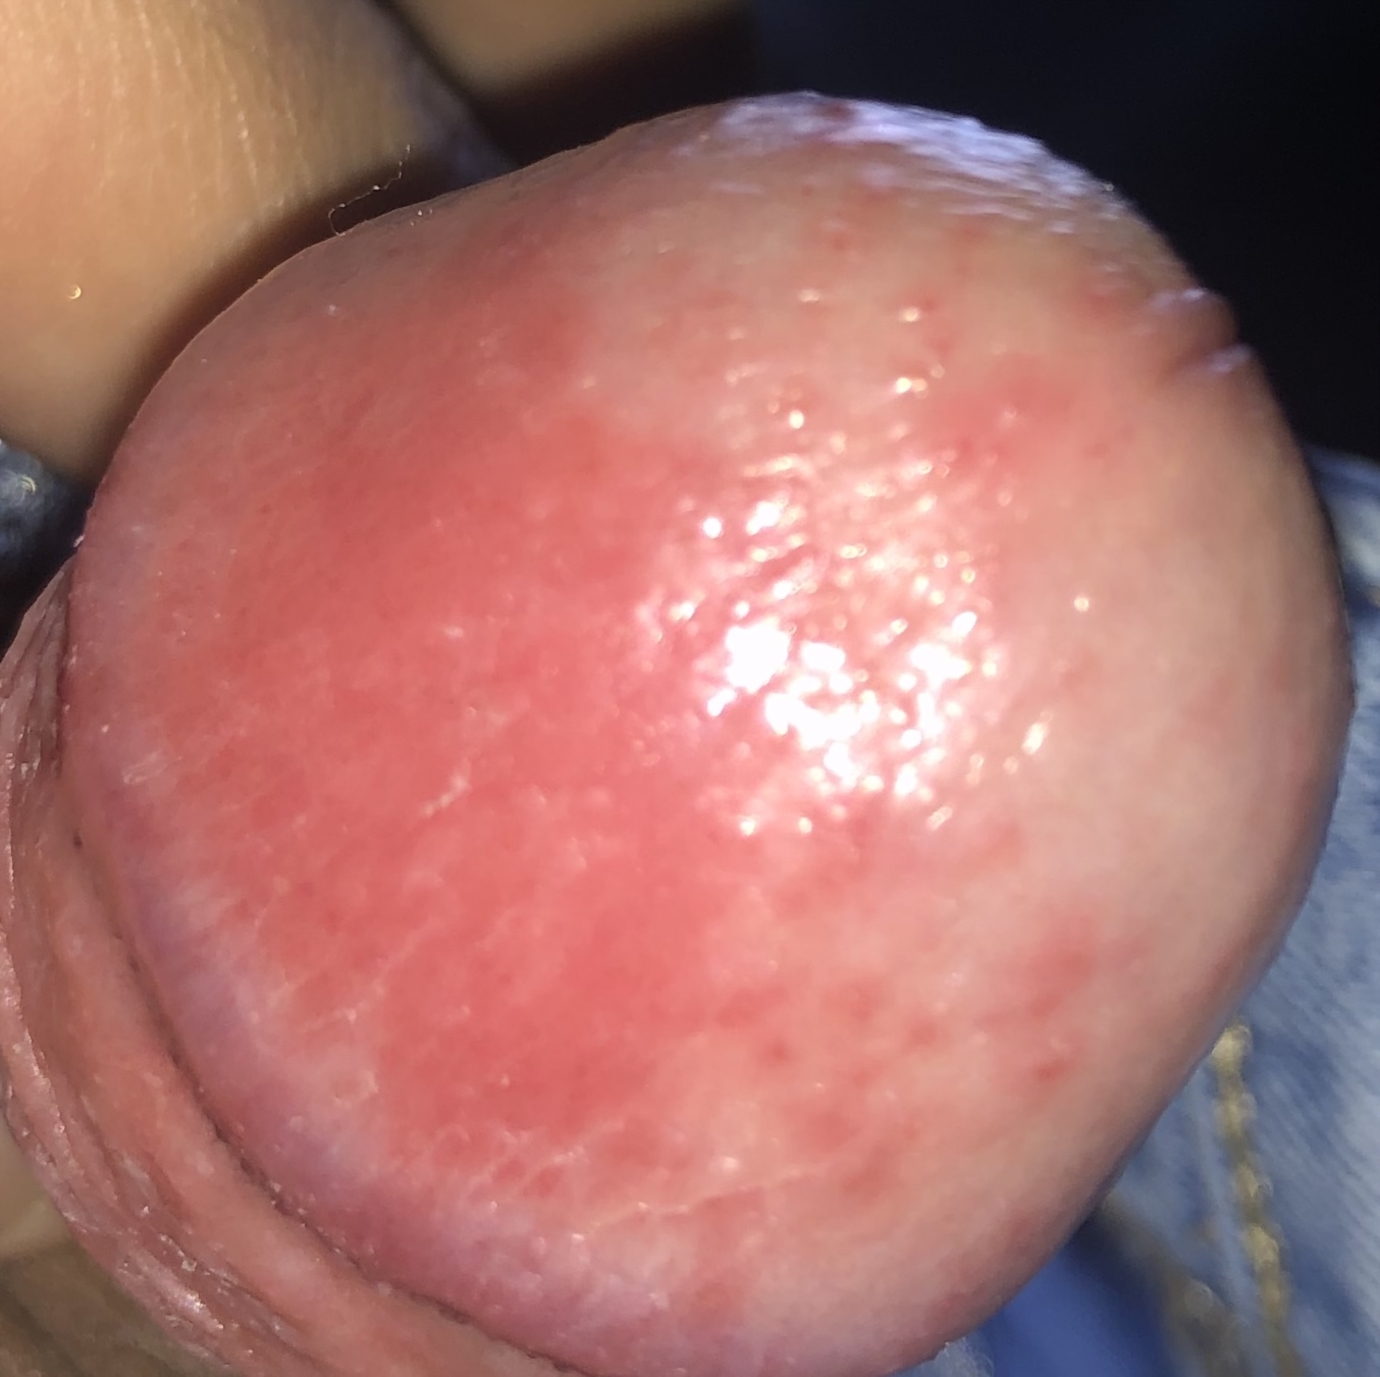 On penis red head of spots little Red Spots